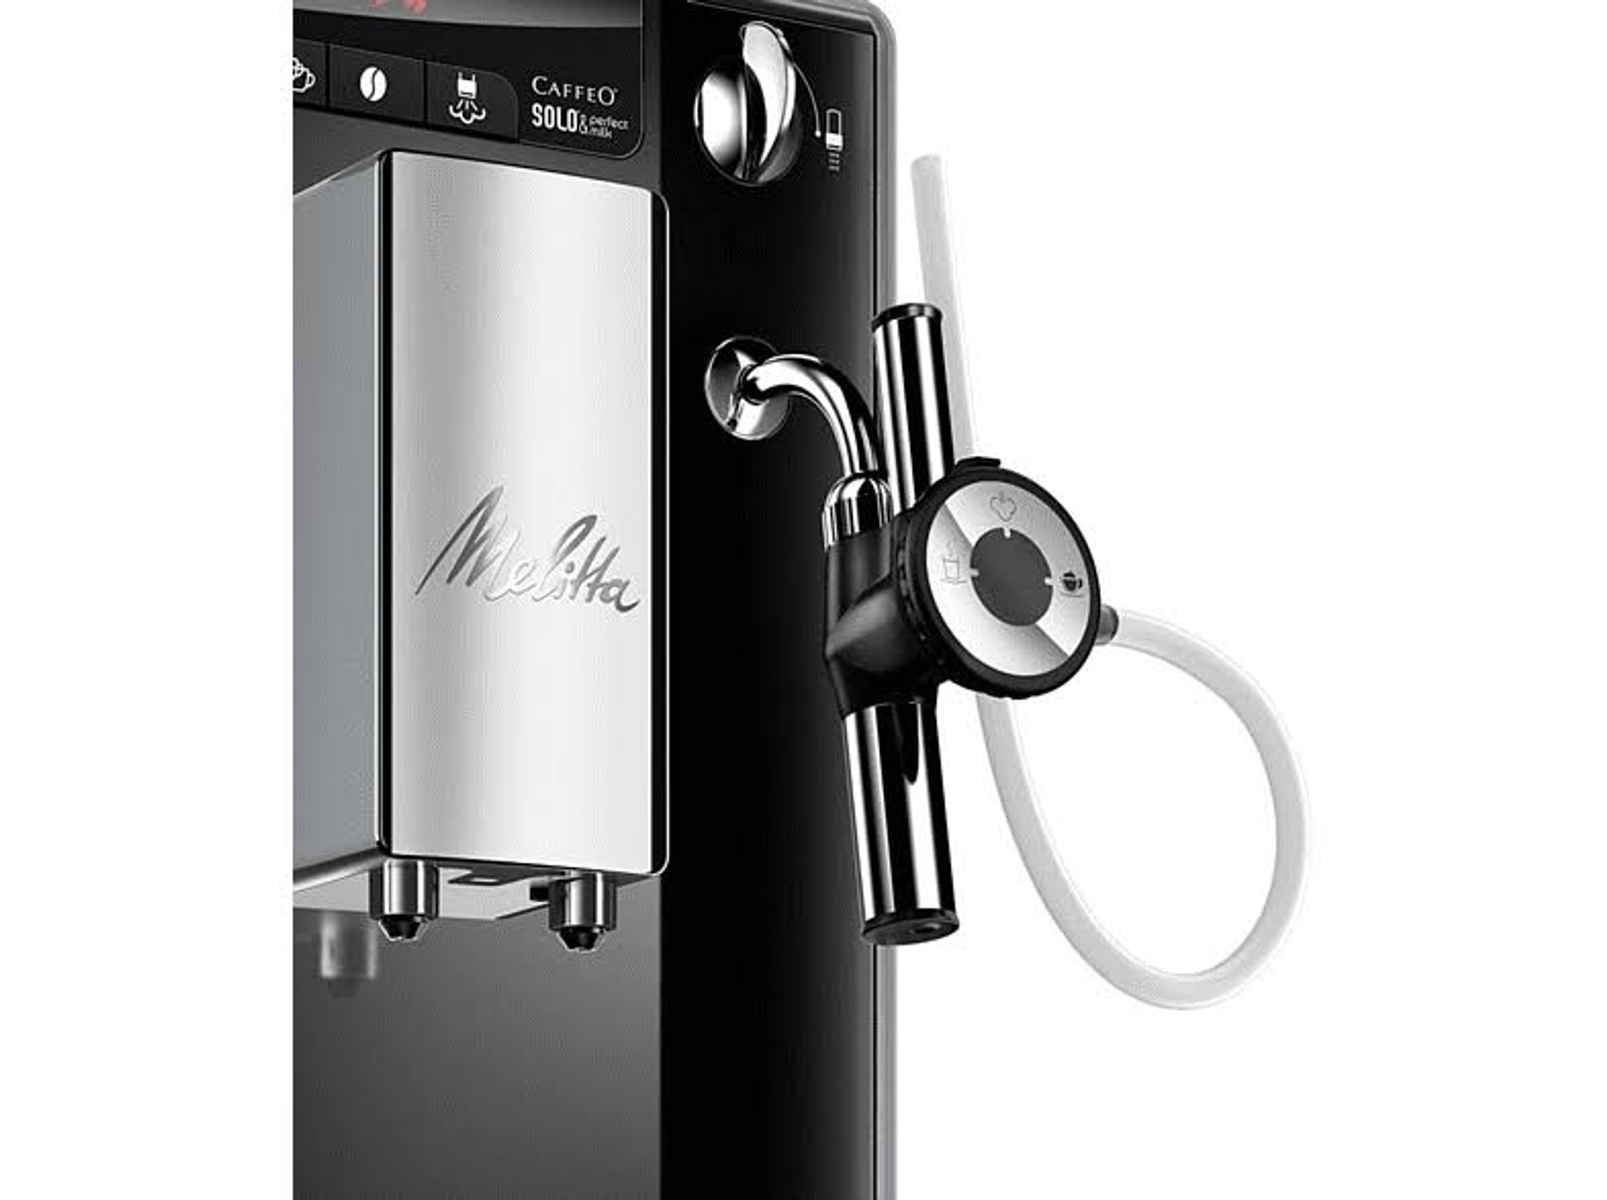 Solo Perfect Kaffeevollautomat MELITTA E schwarz Milk 957-201 &